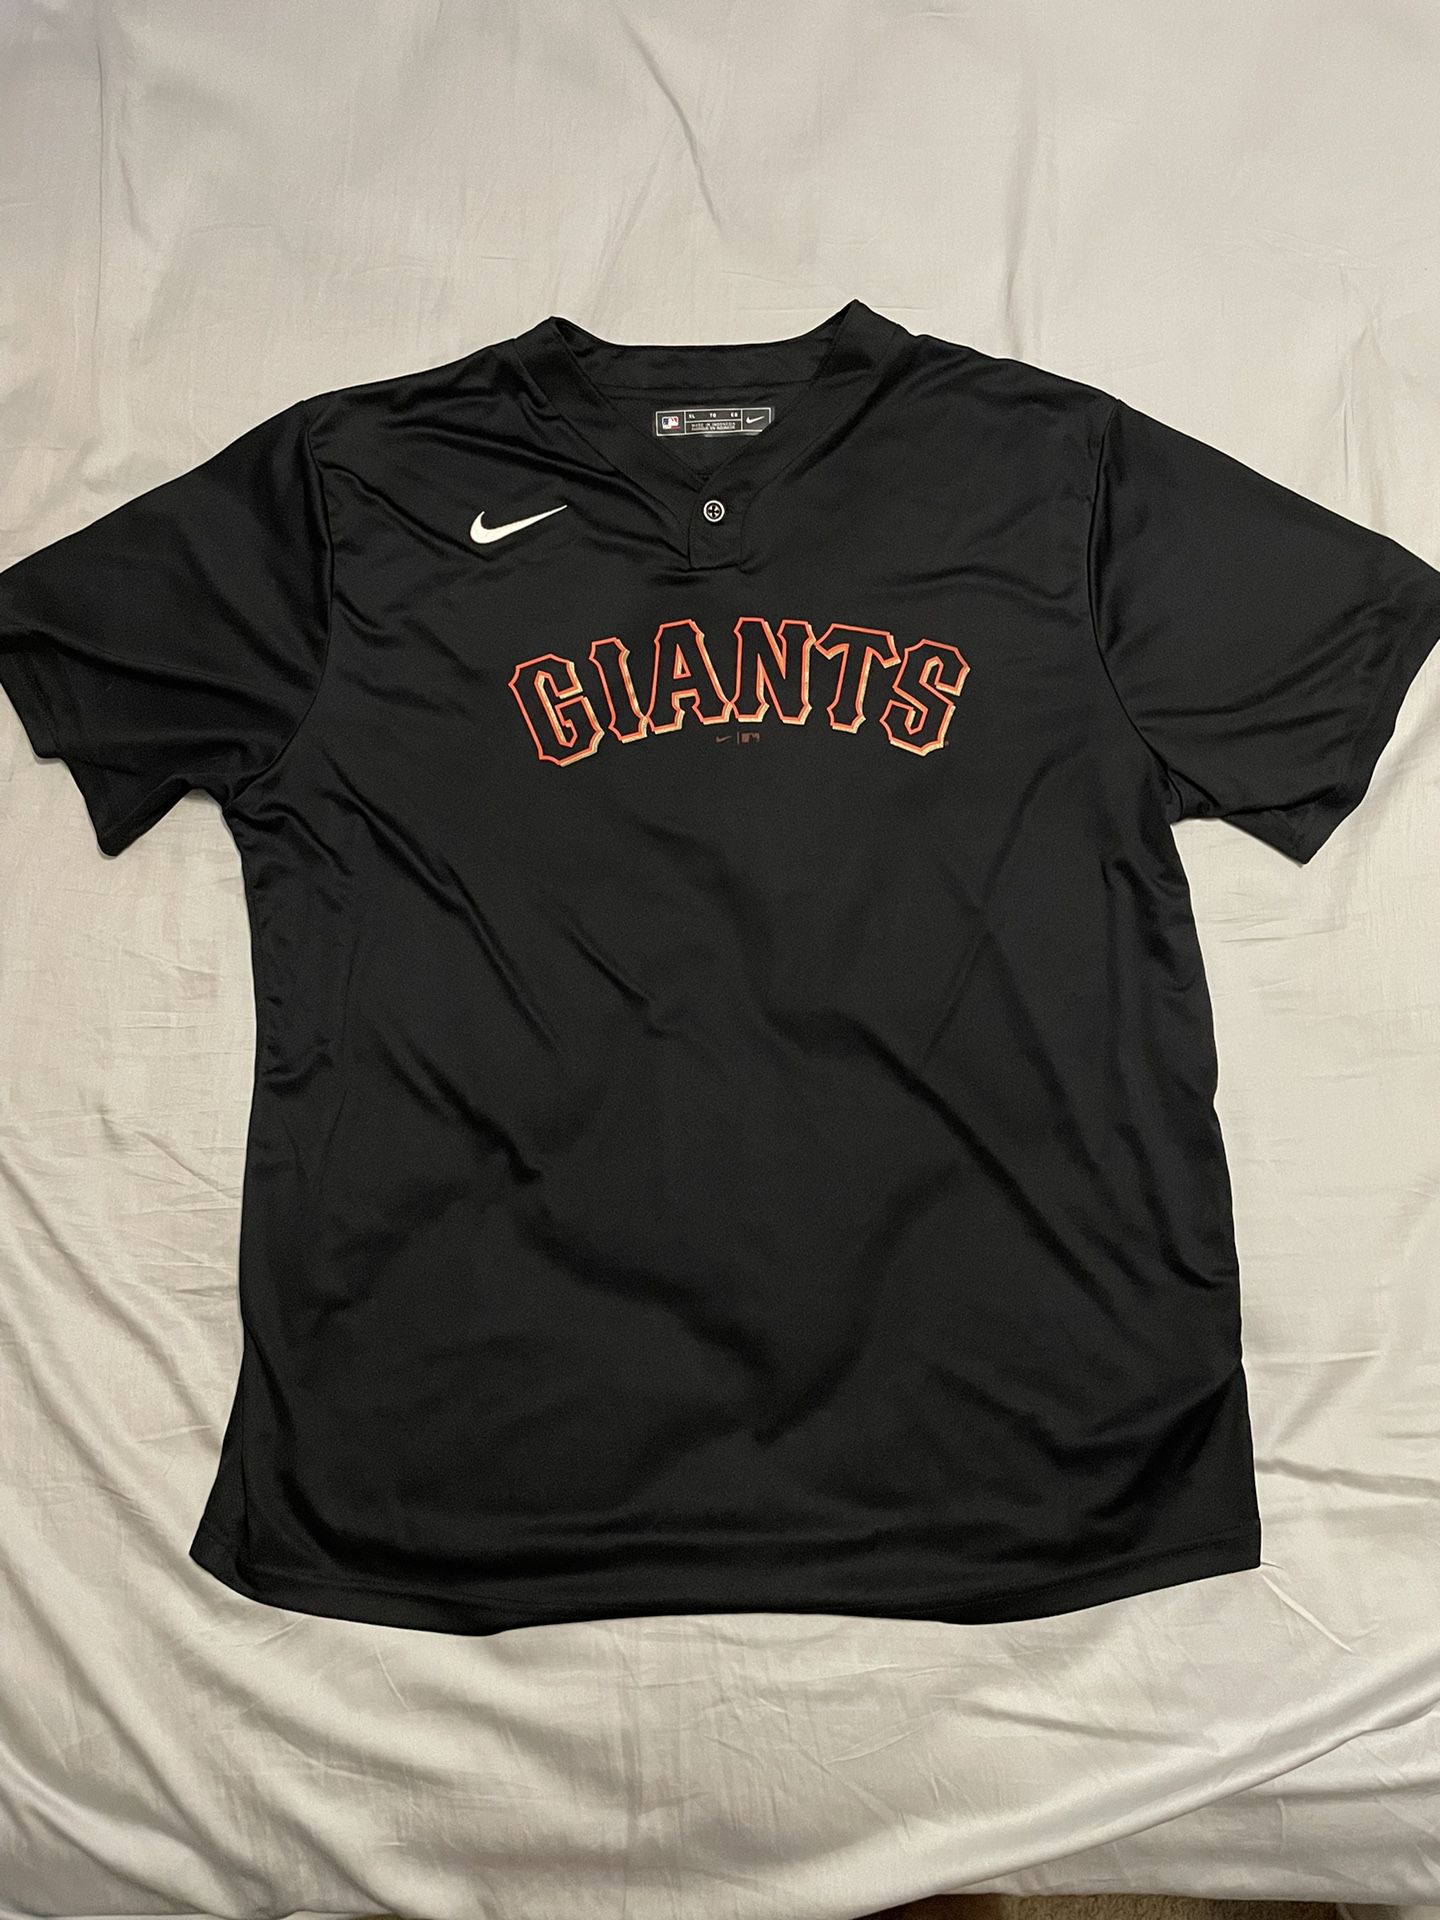 San Francisco Giants Baseball Nike Jersey